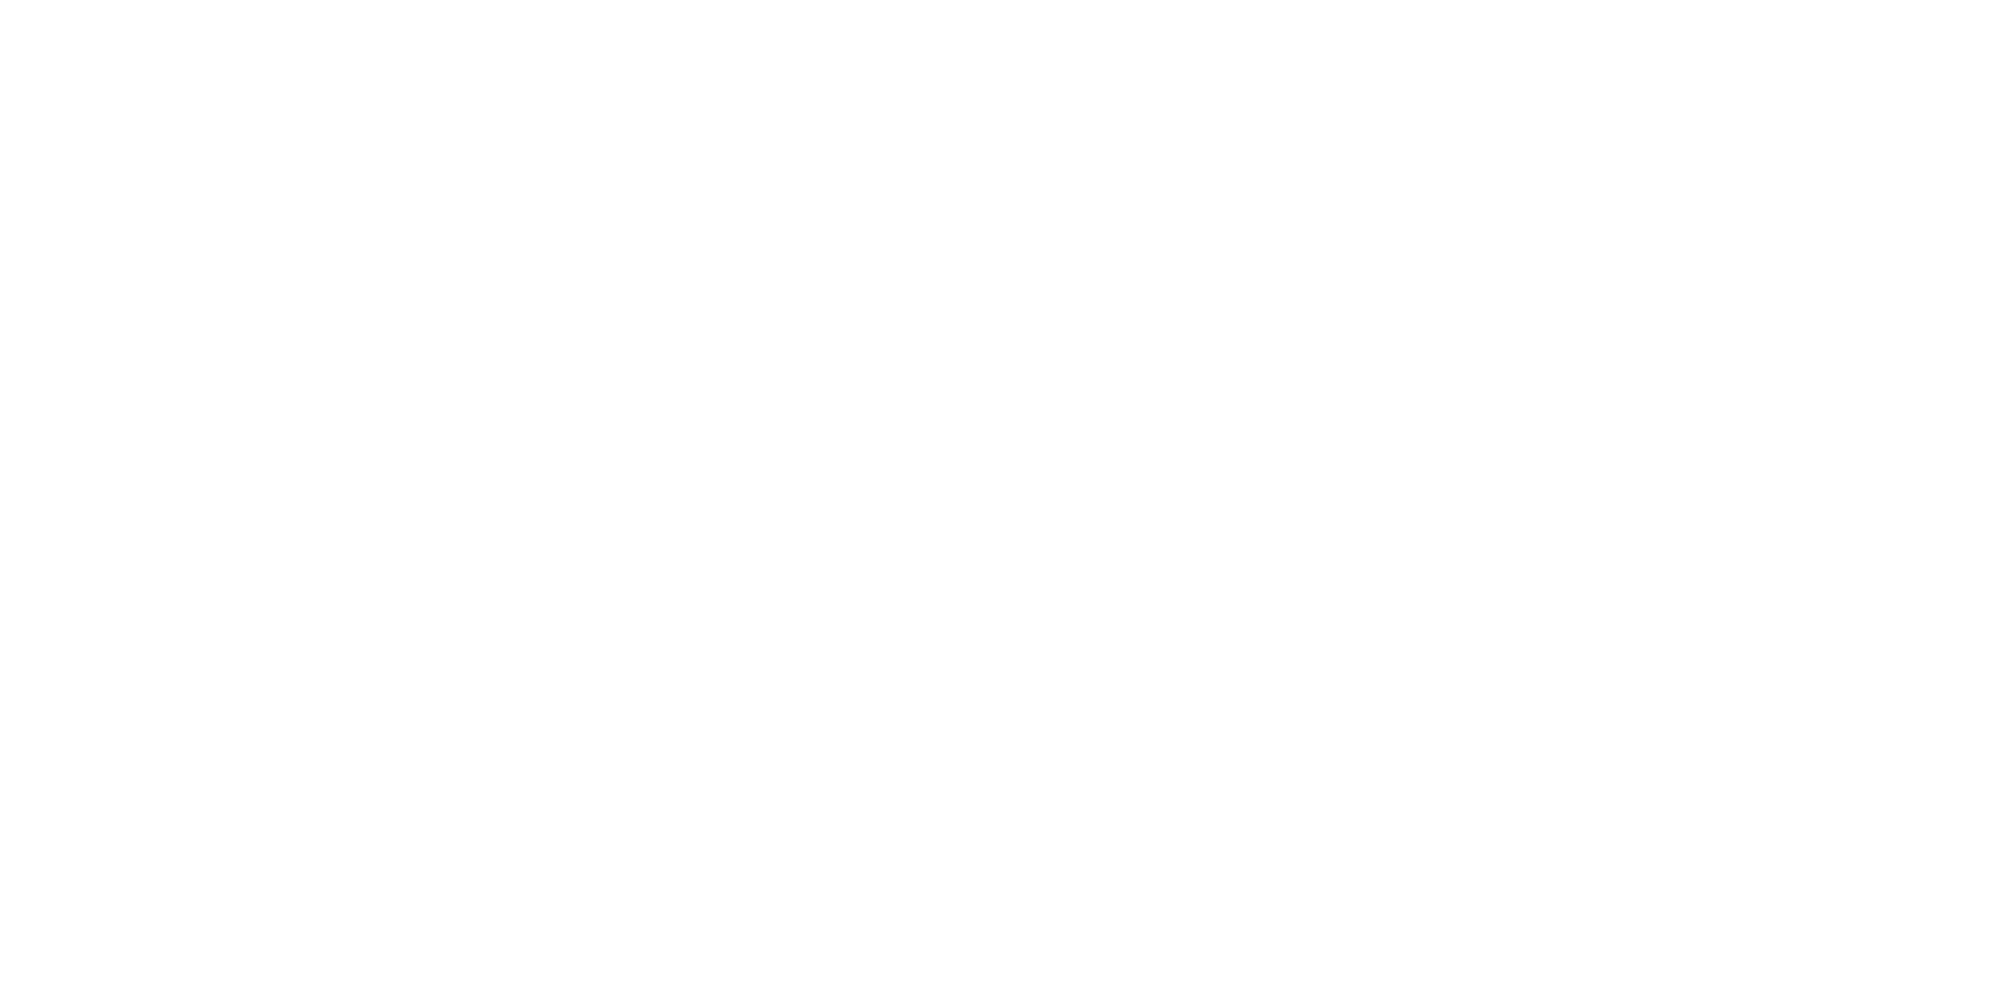 Buckeye Review